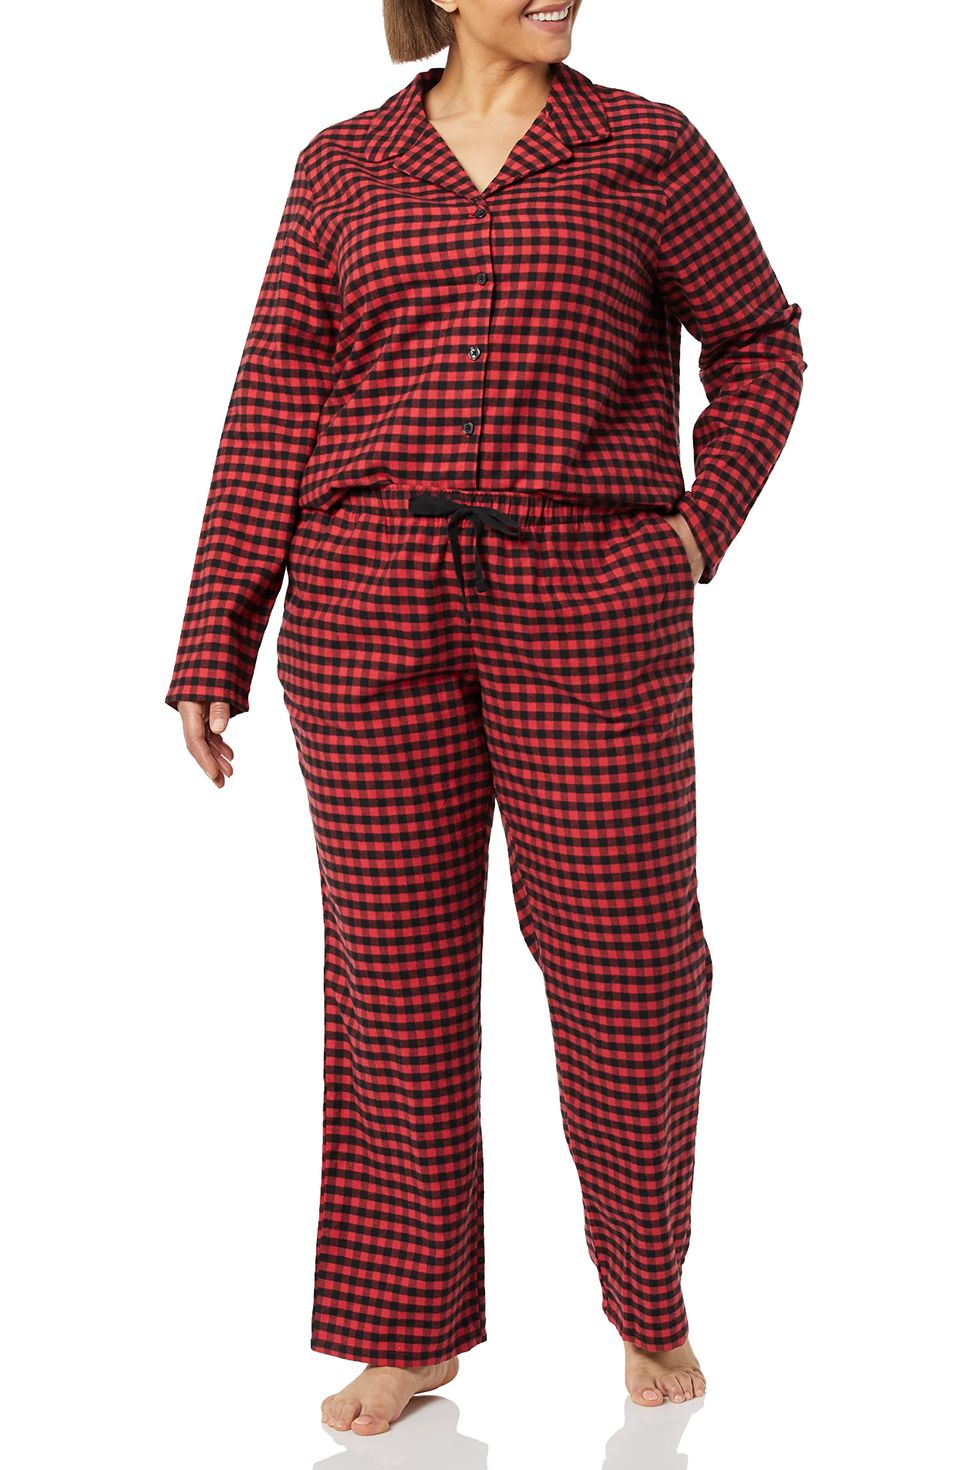 Warm Winter Pajamas Set Women Sleepwear Warm Flannel Long Sleeves Pajamas  Print Elegantl Homewear Thick Home Suit XXL XXXL : : Clothing,  Shoes & Accessories